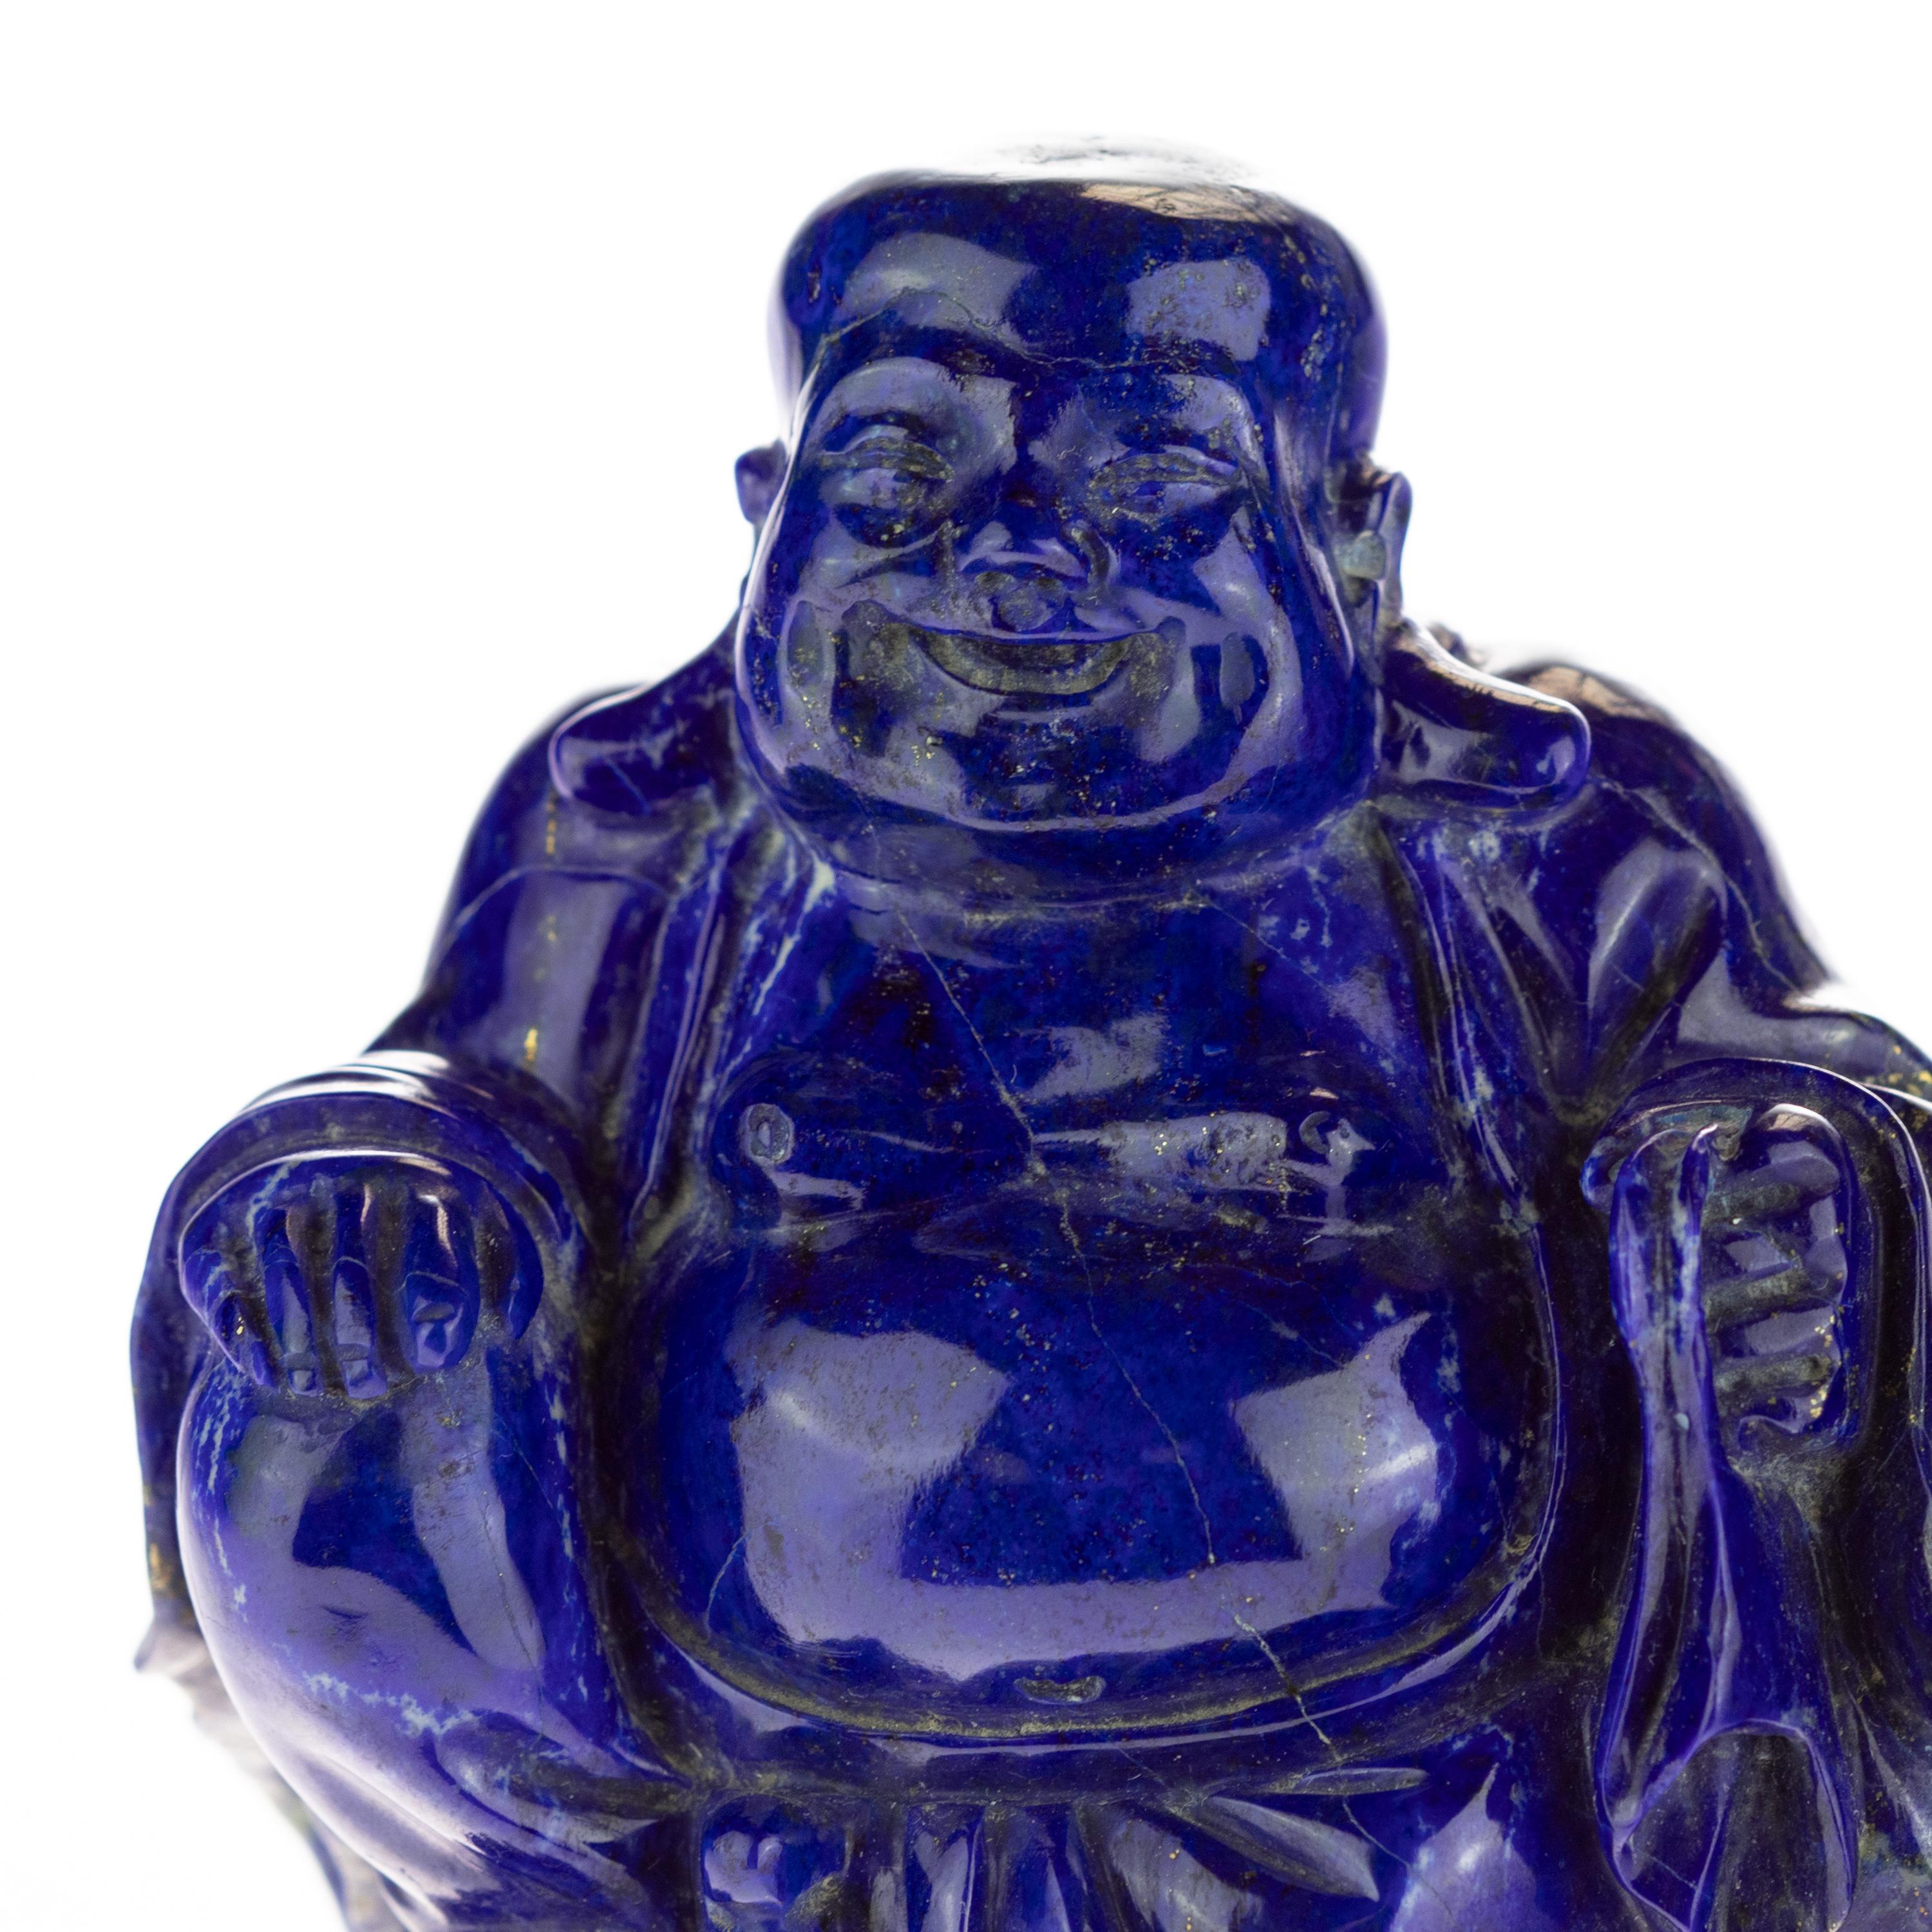 Hand-Carved Lapis Lazuli Meditation Buddha Carved Gemstone Asian Art Statue Sculpture For Sale